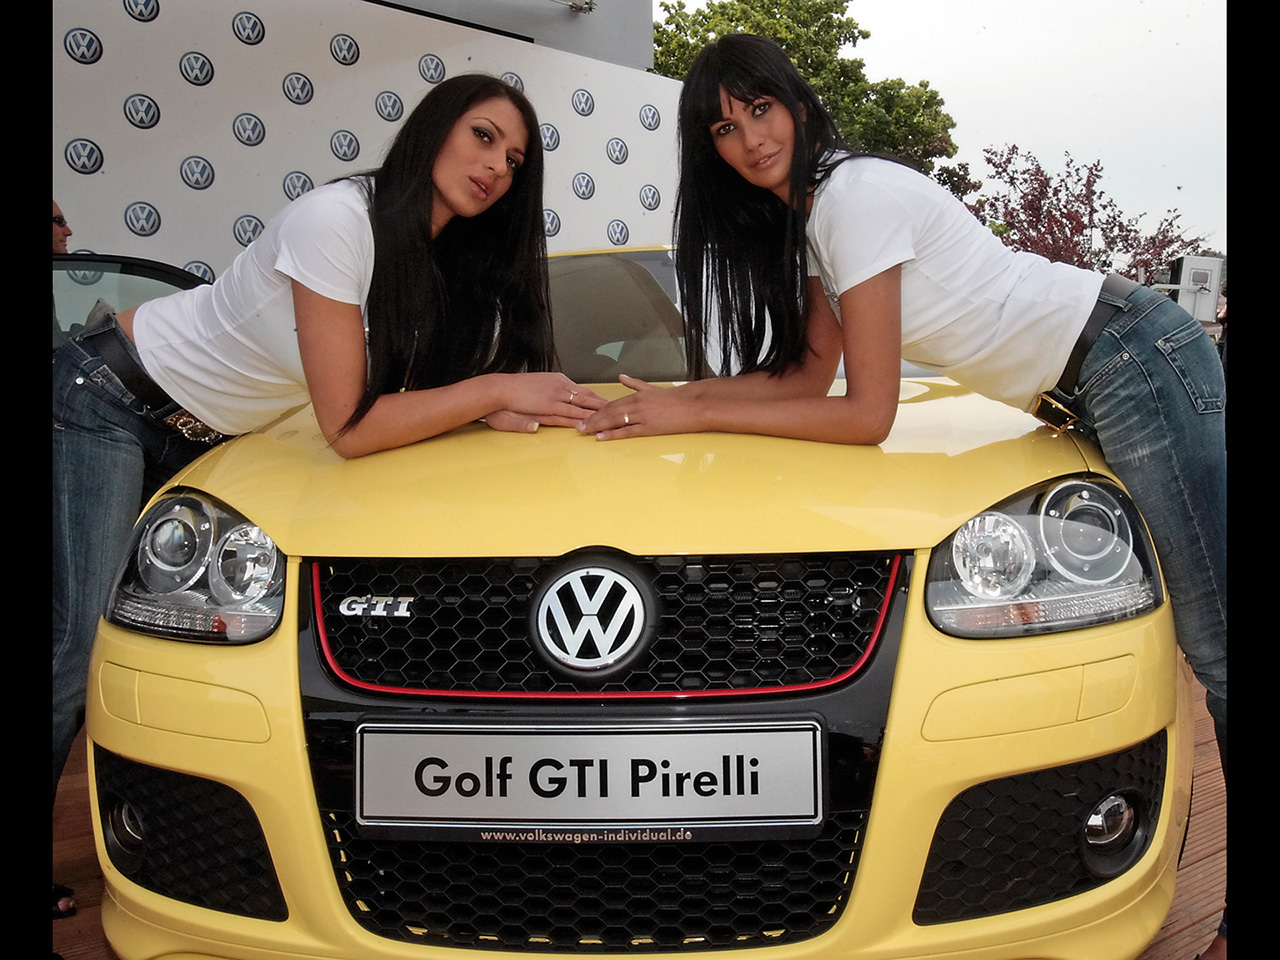 http://3.bp.blogspot.com/_cLWqMZQ1CPk/TH1OB7YIIKI/AAAAAAAACf0/bdYncx2WBQI/s1600/2008-Volkswagen-Golf-GTI-Pirelli-Girls-1280x960.jpg